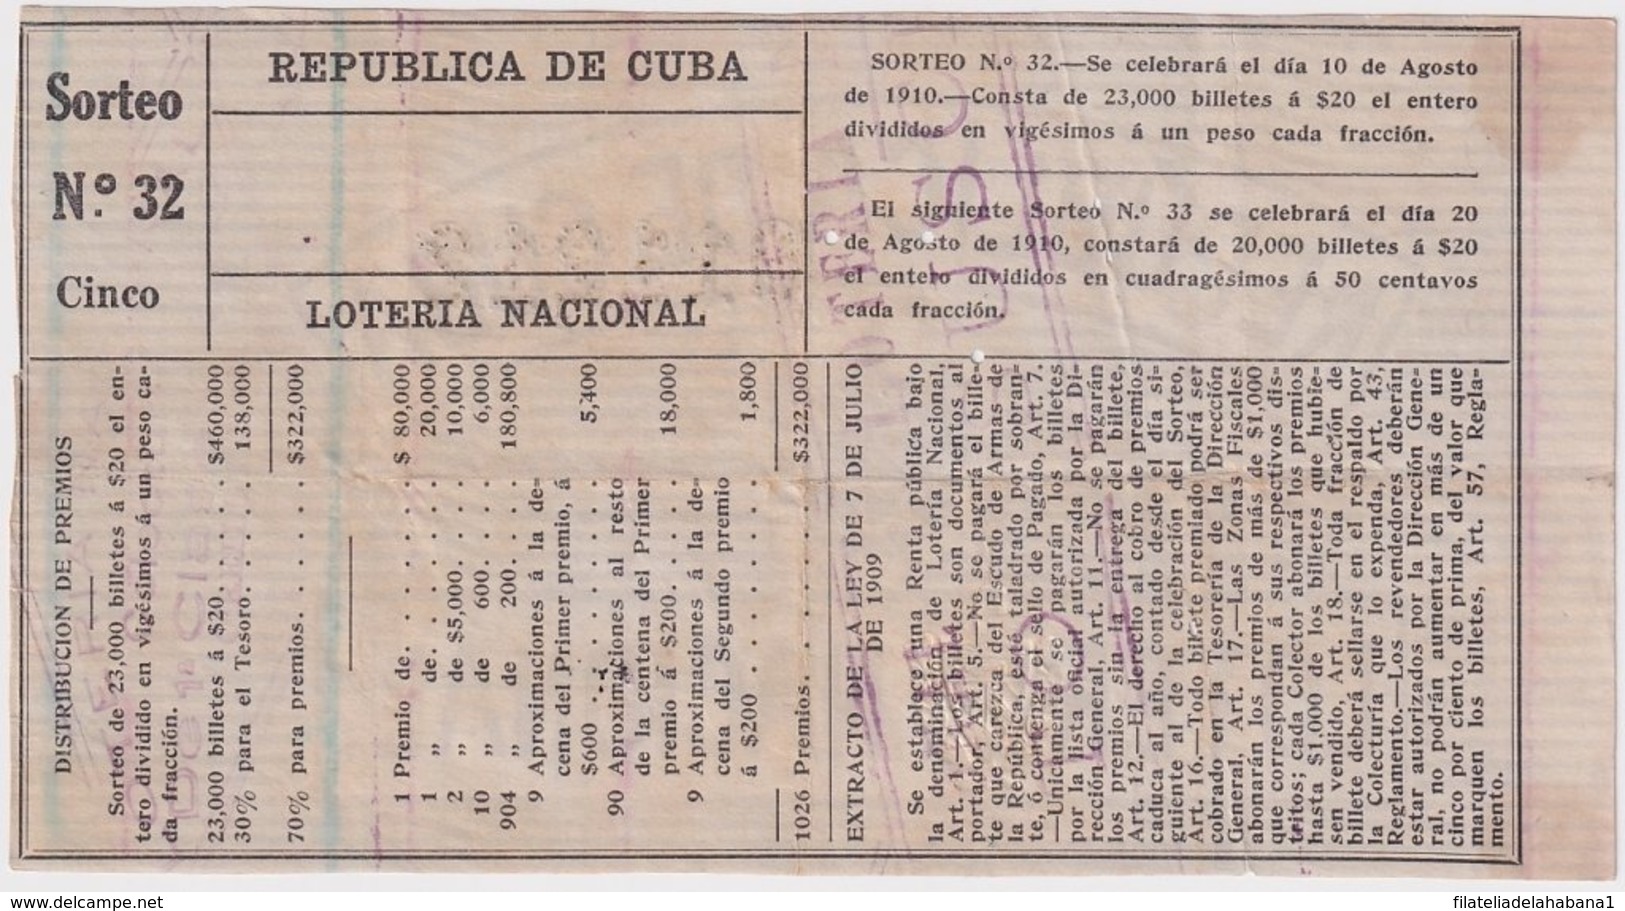 LOT-378 CUBA REPUBLICA 1910 SORTEO 32. LOTTERY LOTERIA. - Lottery Tickets